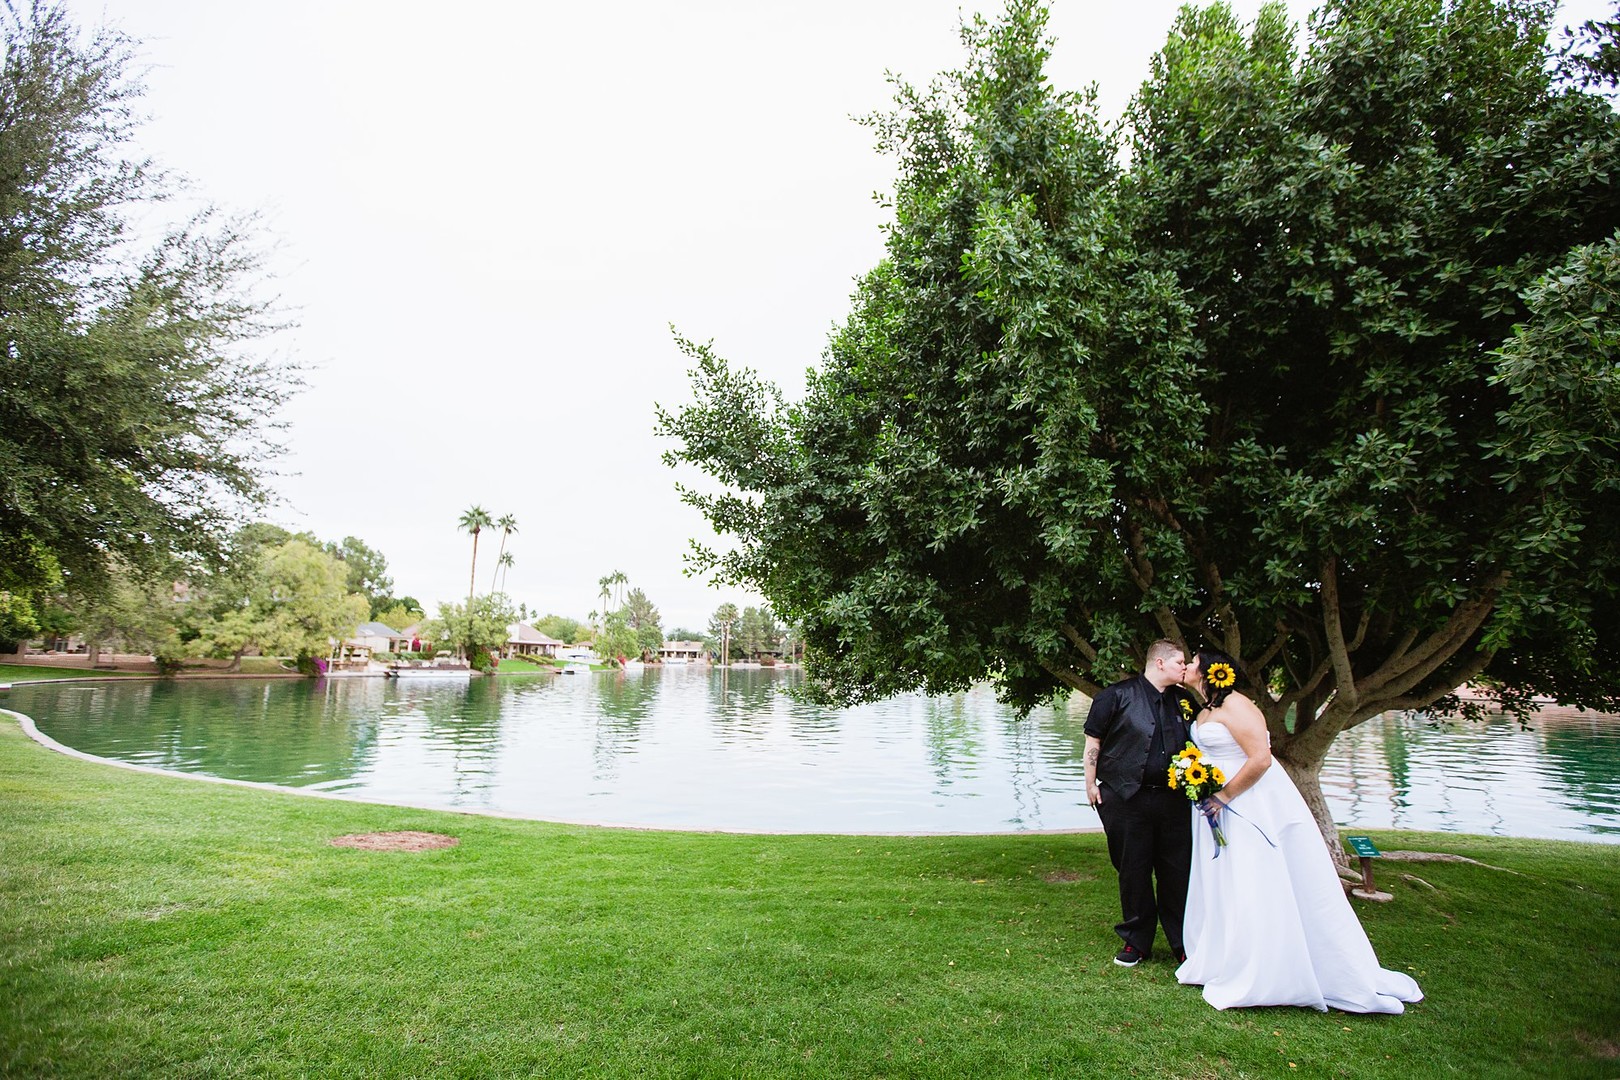 Fun and romantic Arizona backyard wedding lesbian two brides sunflowers bouquet tuxedo white dress lake